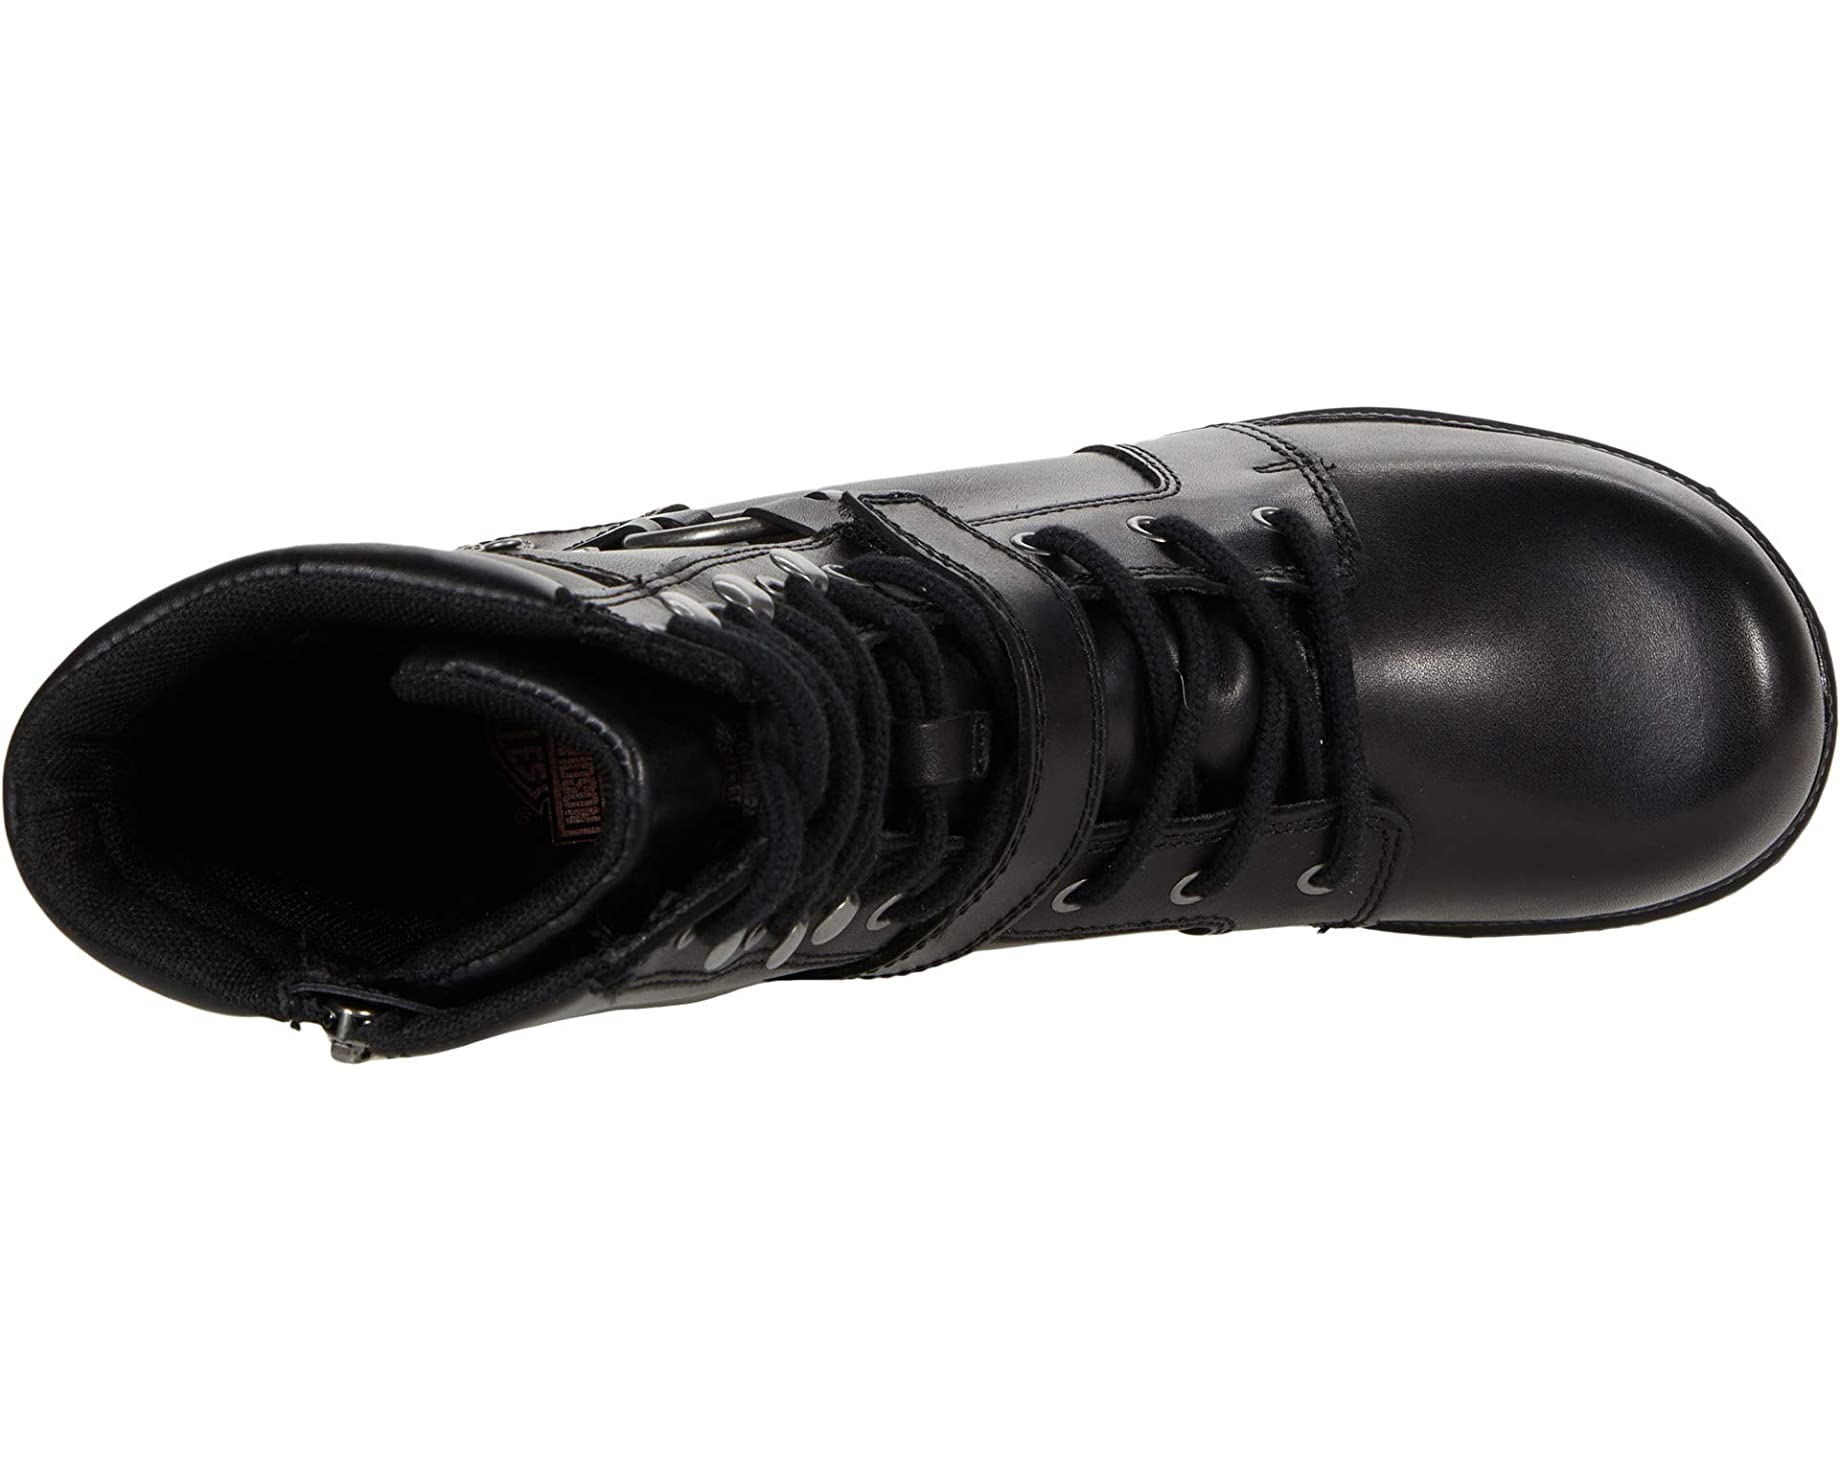 Ботинки Tegan 6 Harness Harley-Davidson, черный ботинки harley davidson ashby lace up черный